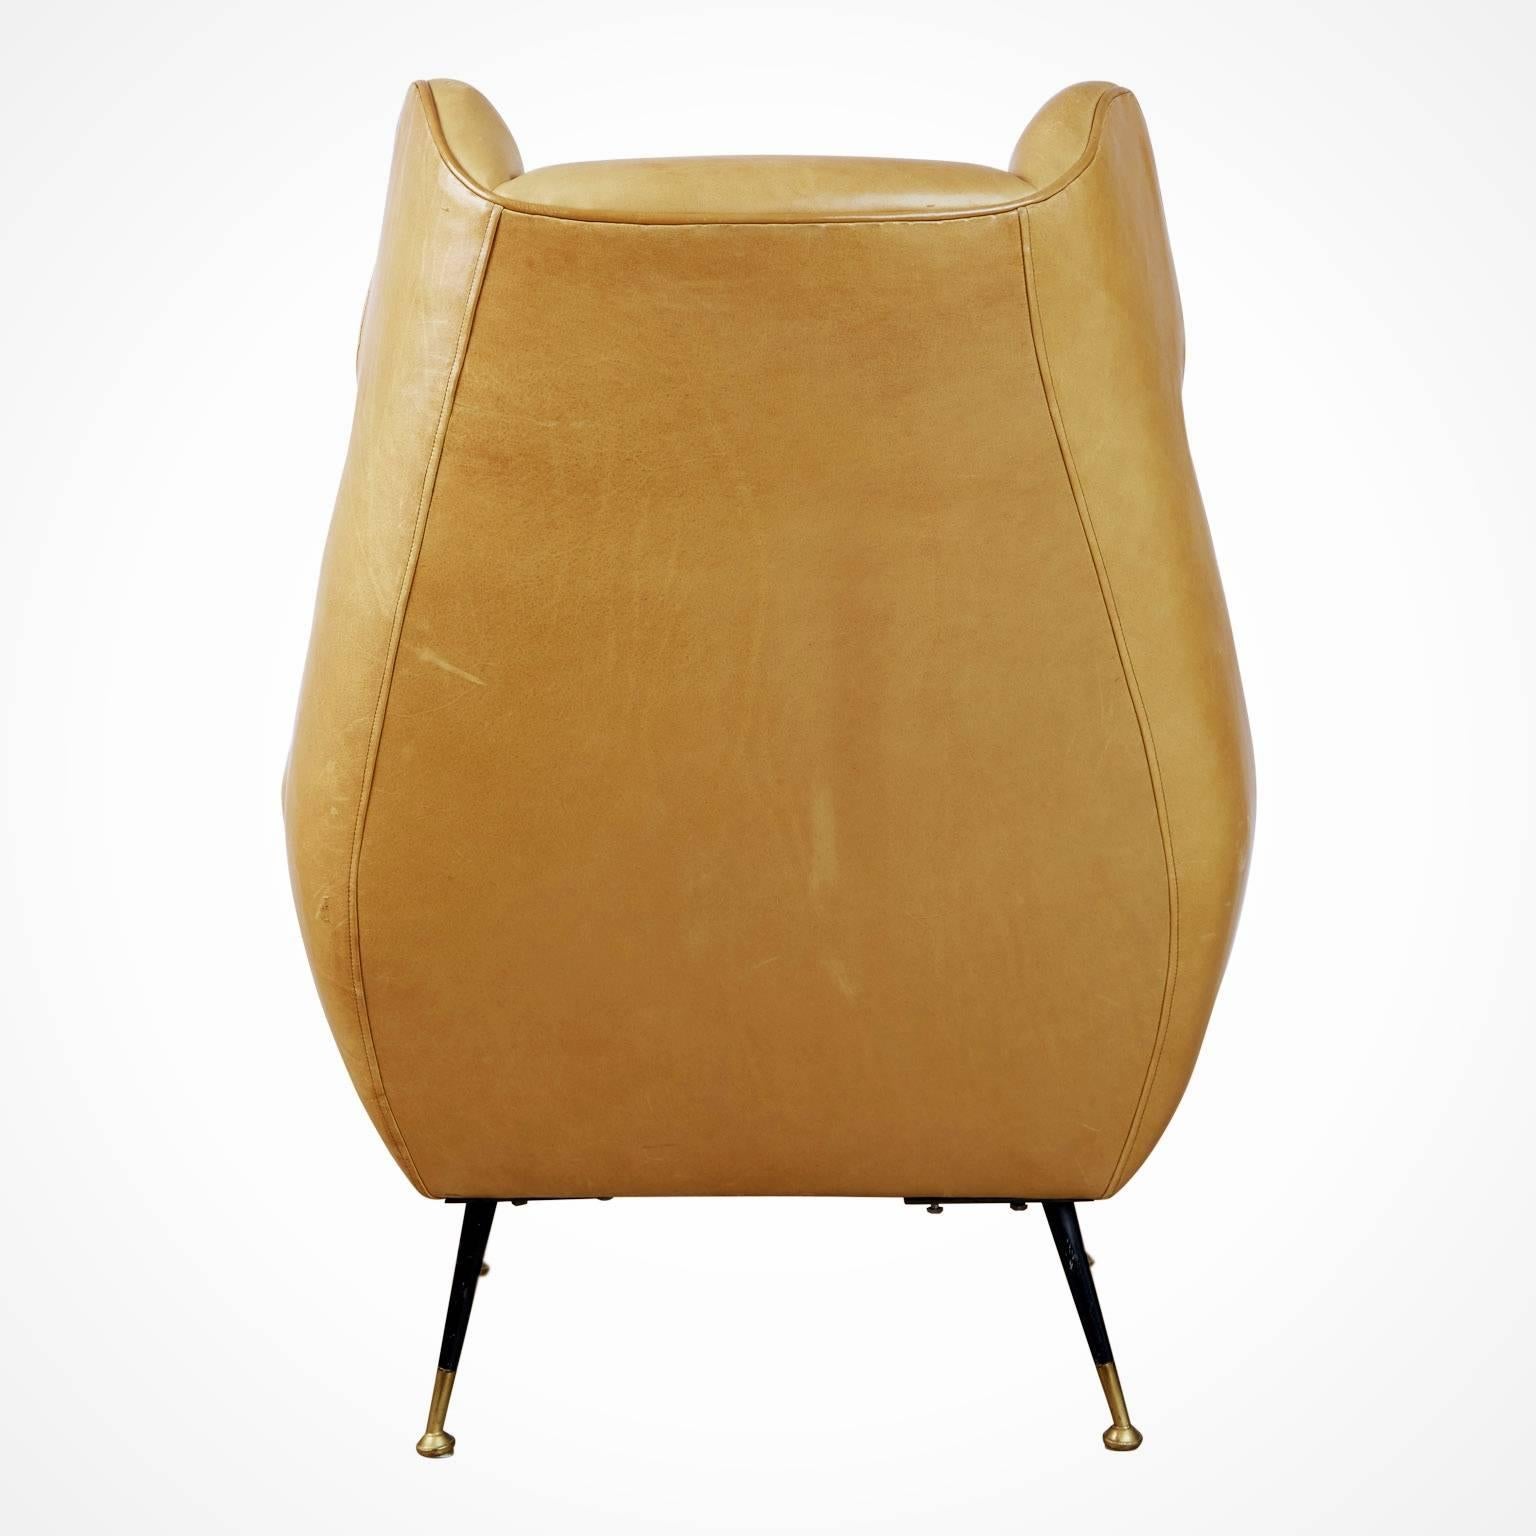 Gigi Radice for Minotti Leather Wingback Chairs, Pair, Italy circa 1960 (Mitte des 20. Jahrhunderts)